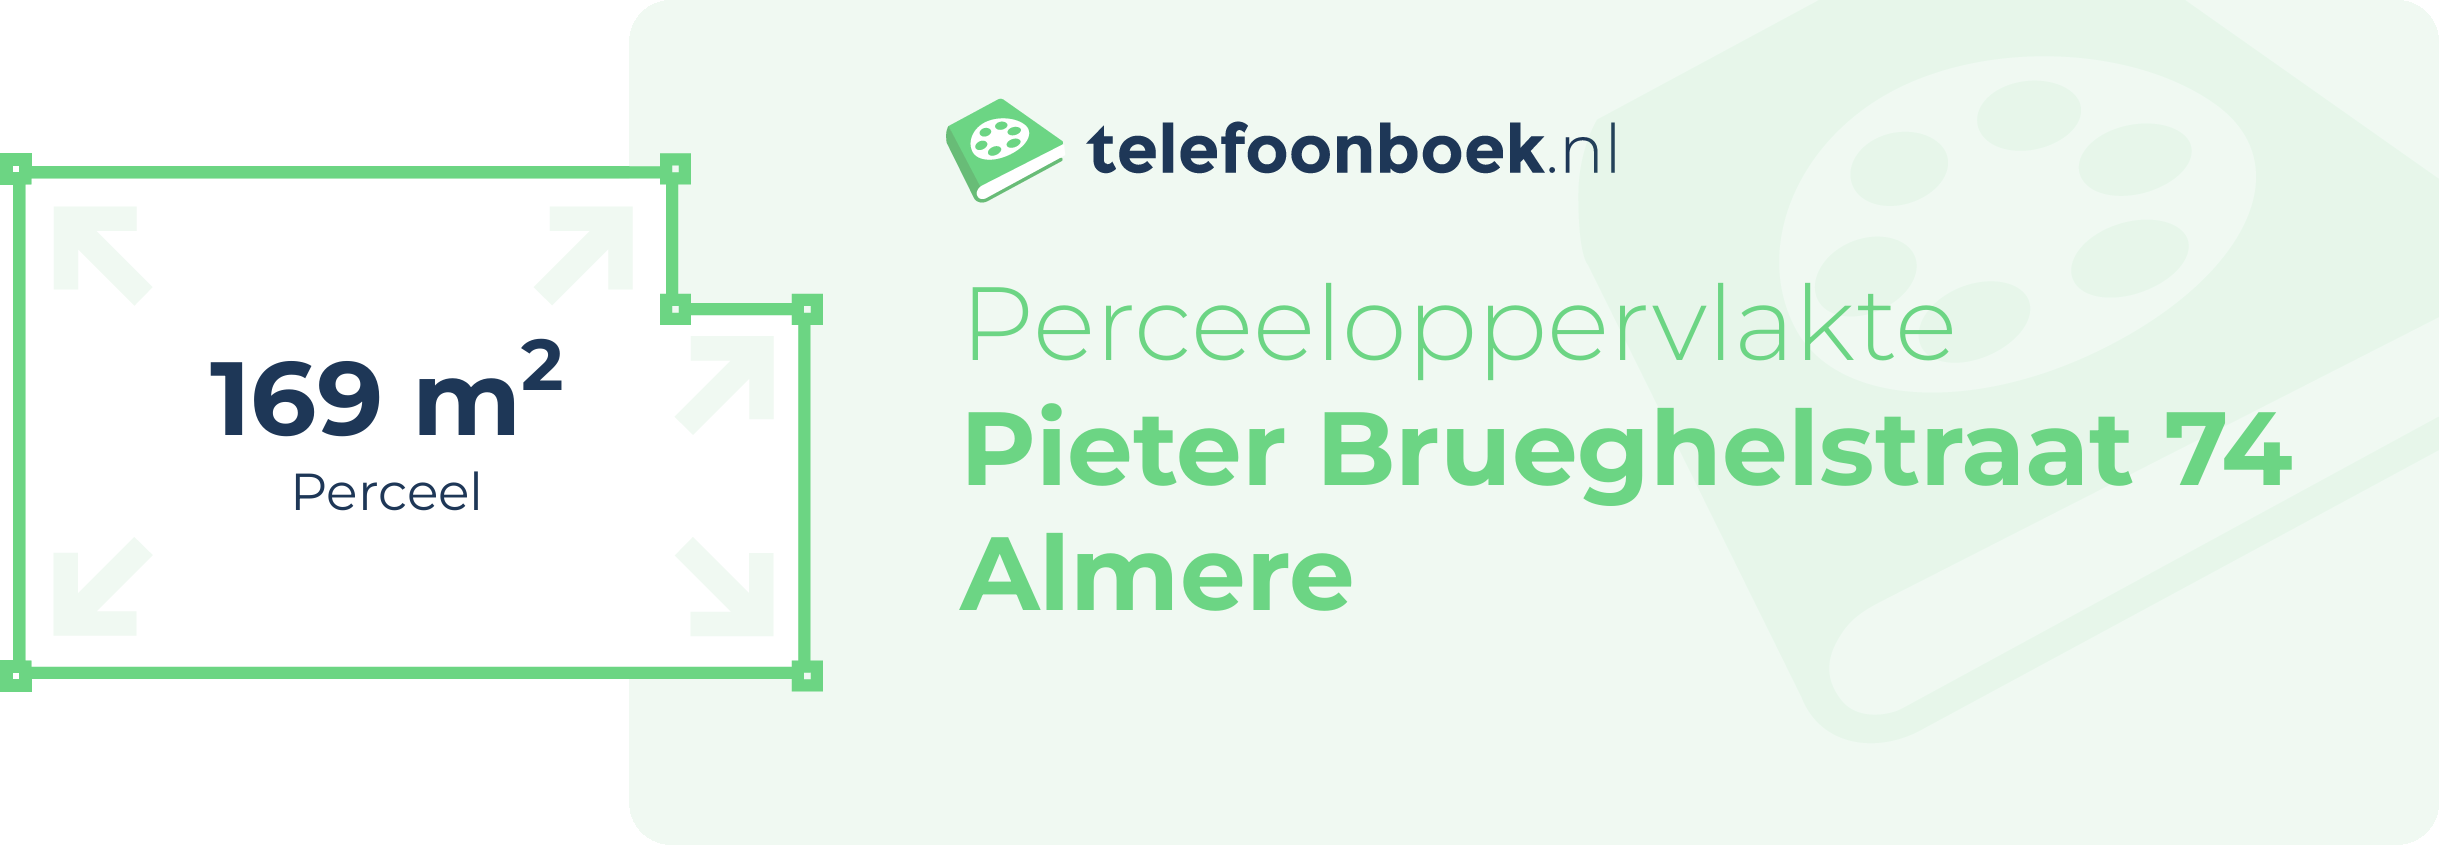 Perceeloppervlakte Pieter Brueghelstraat 74 Almere